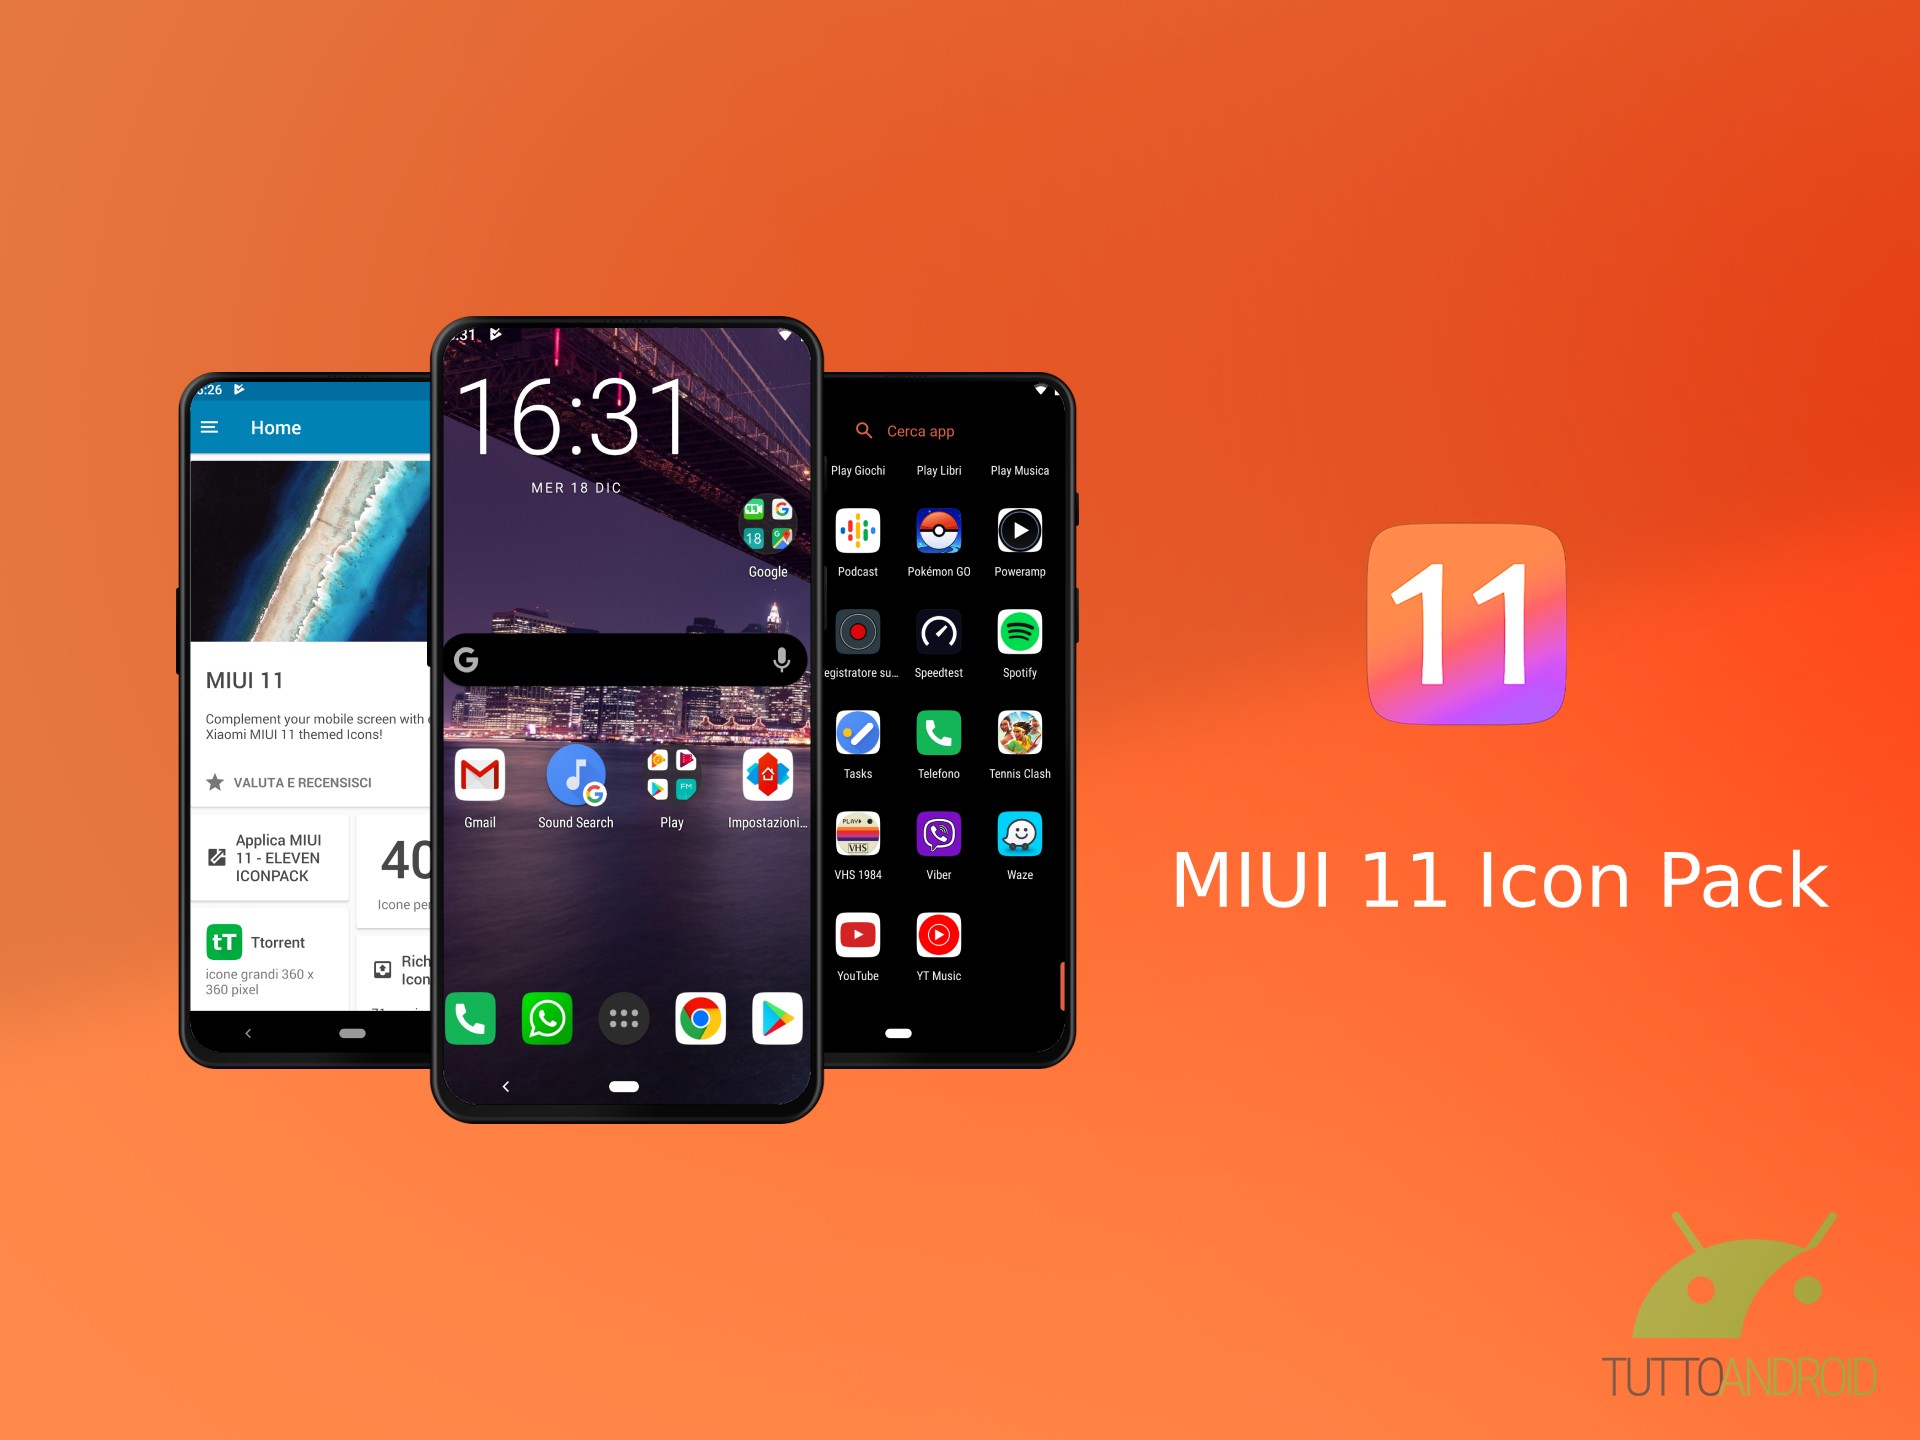 Miui icon pack. Миуи 11. MIUI 11 icons. Иконки приложений MIUI 11. MIUI 11 icon Pack.